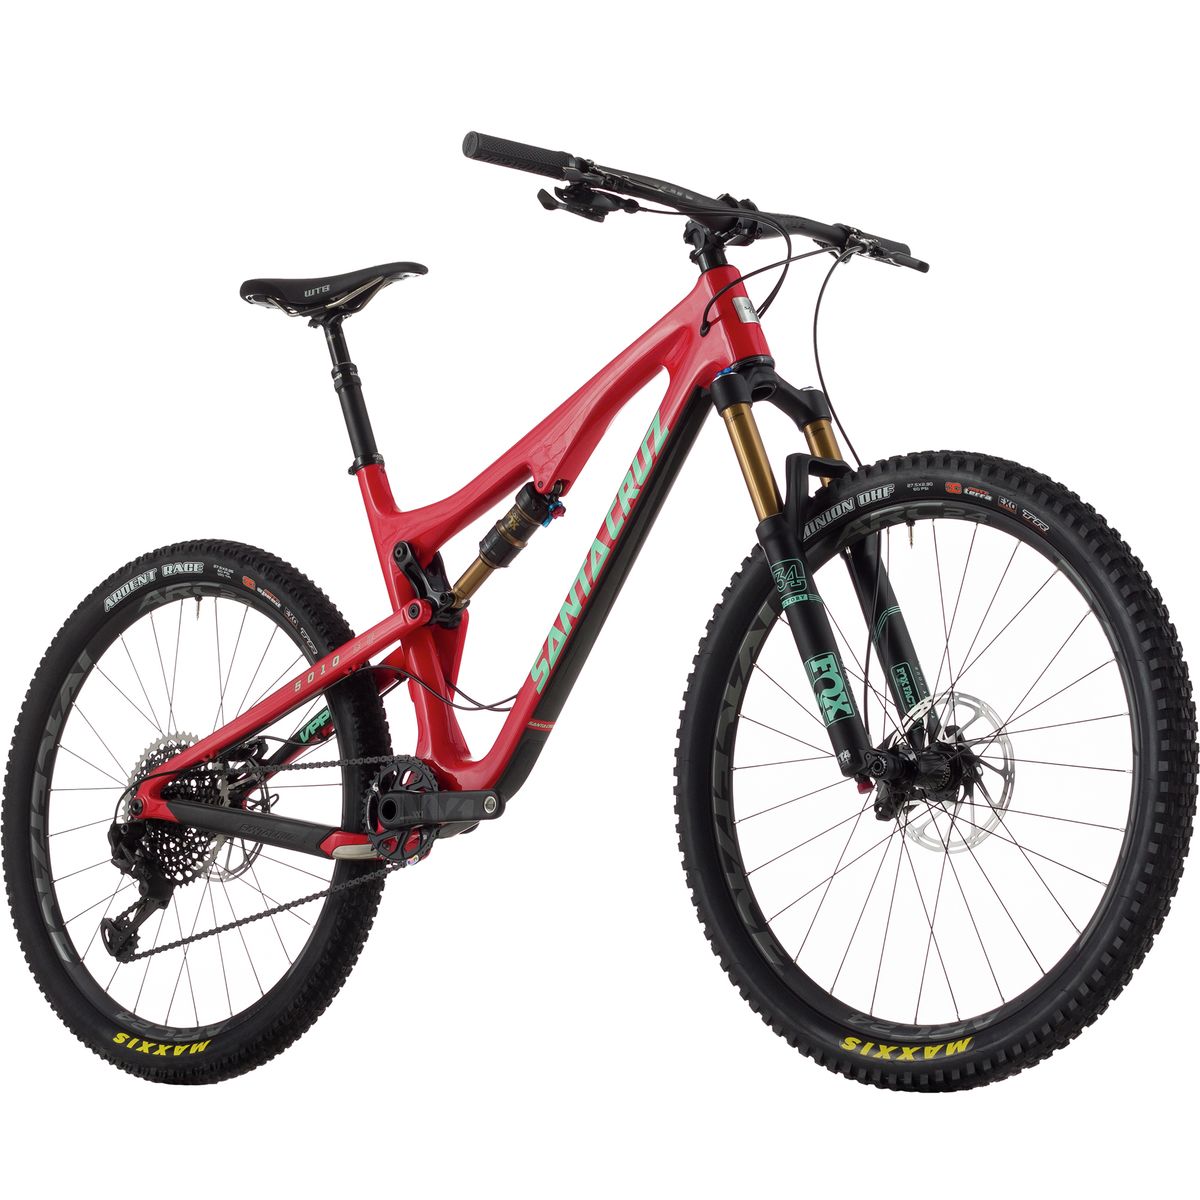 Santa Cruz Bicycles 5010 20 Carbon CC XX1 Complete Mountain Bike 2017